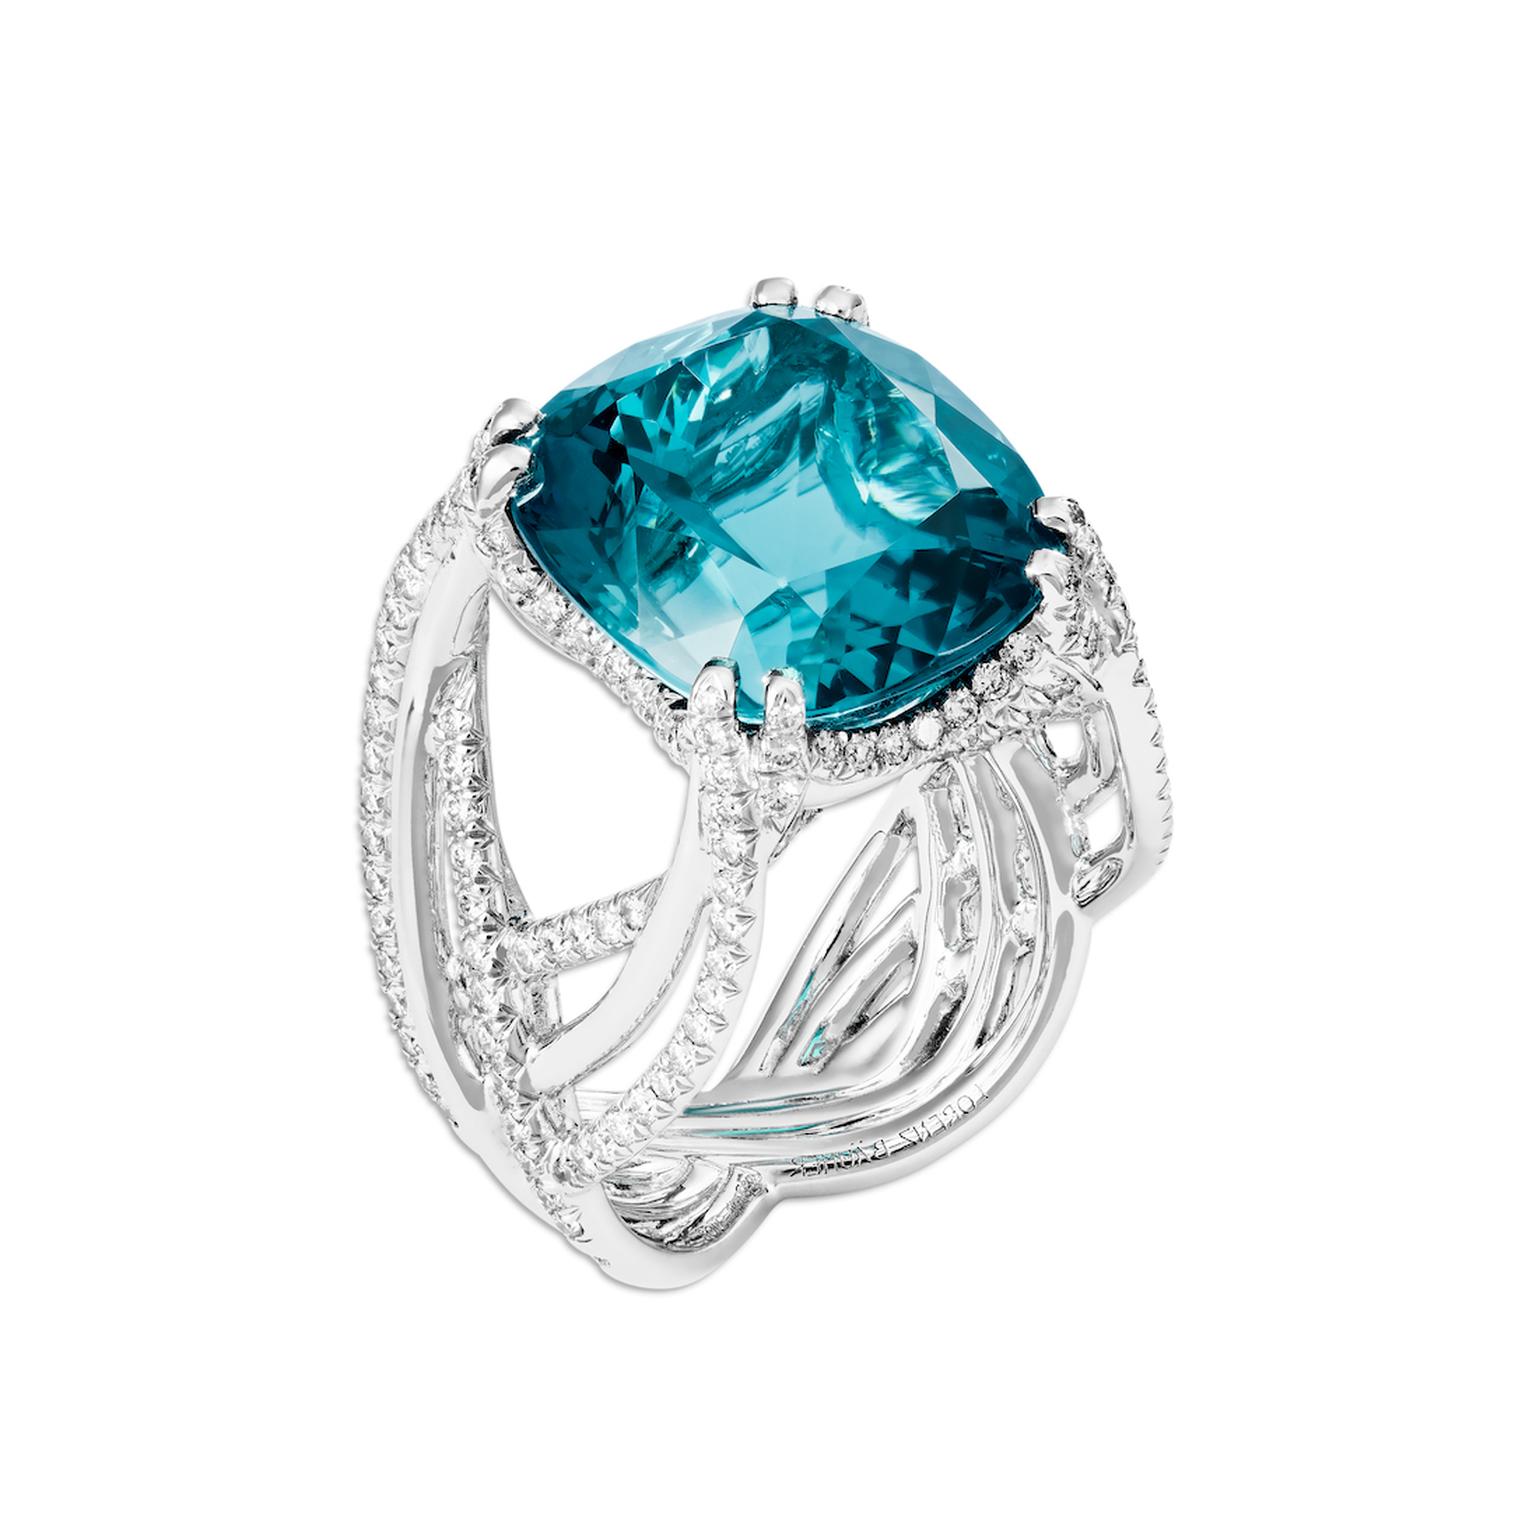 Lorenz Baumer Oasis blue tourmaline ring with diamonds